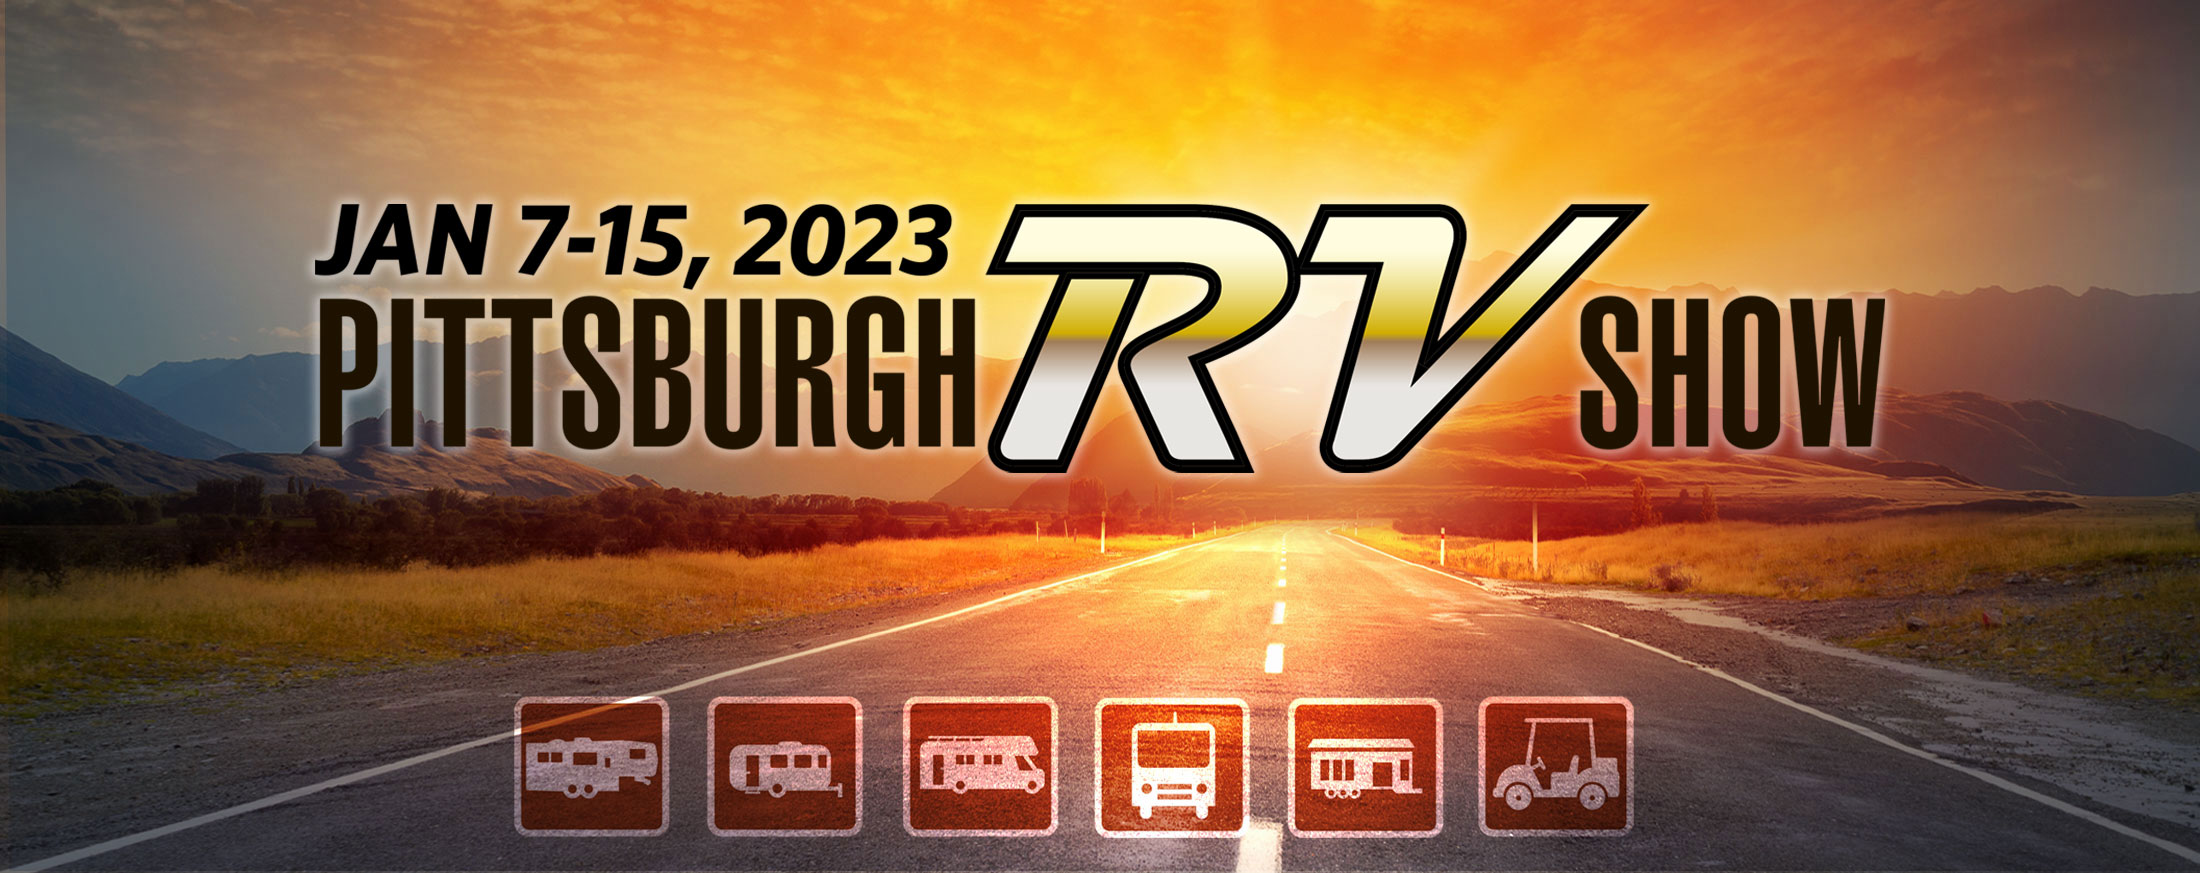 2023 Pittsburgh RV Show Pittsburgh, PA